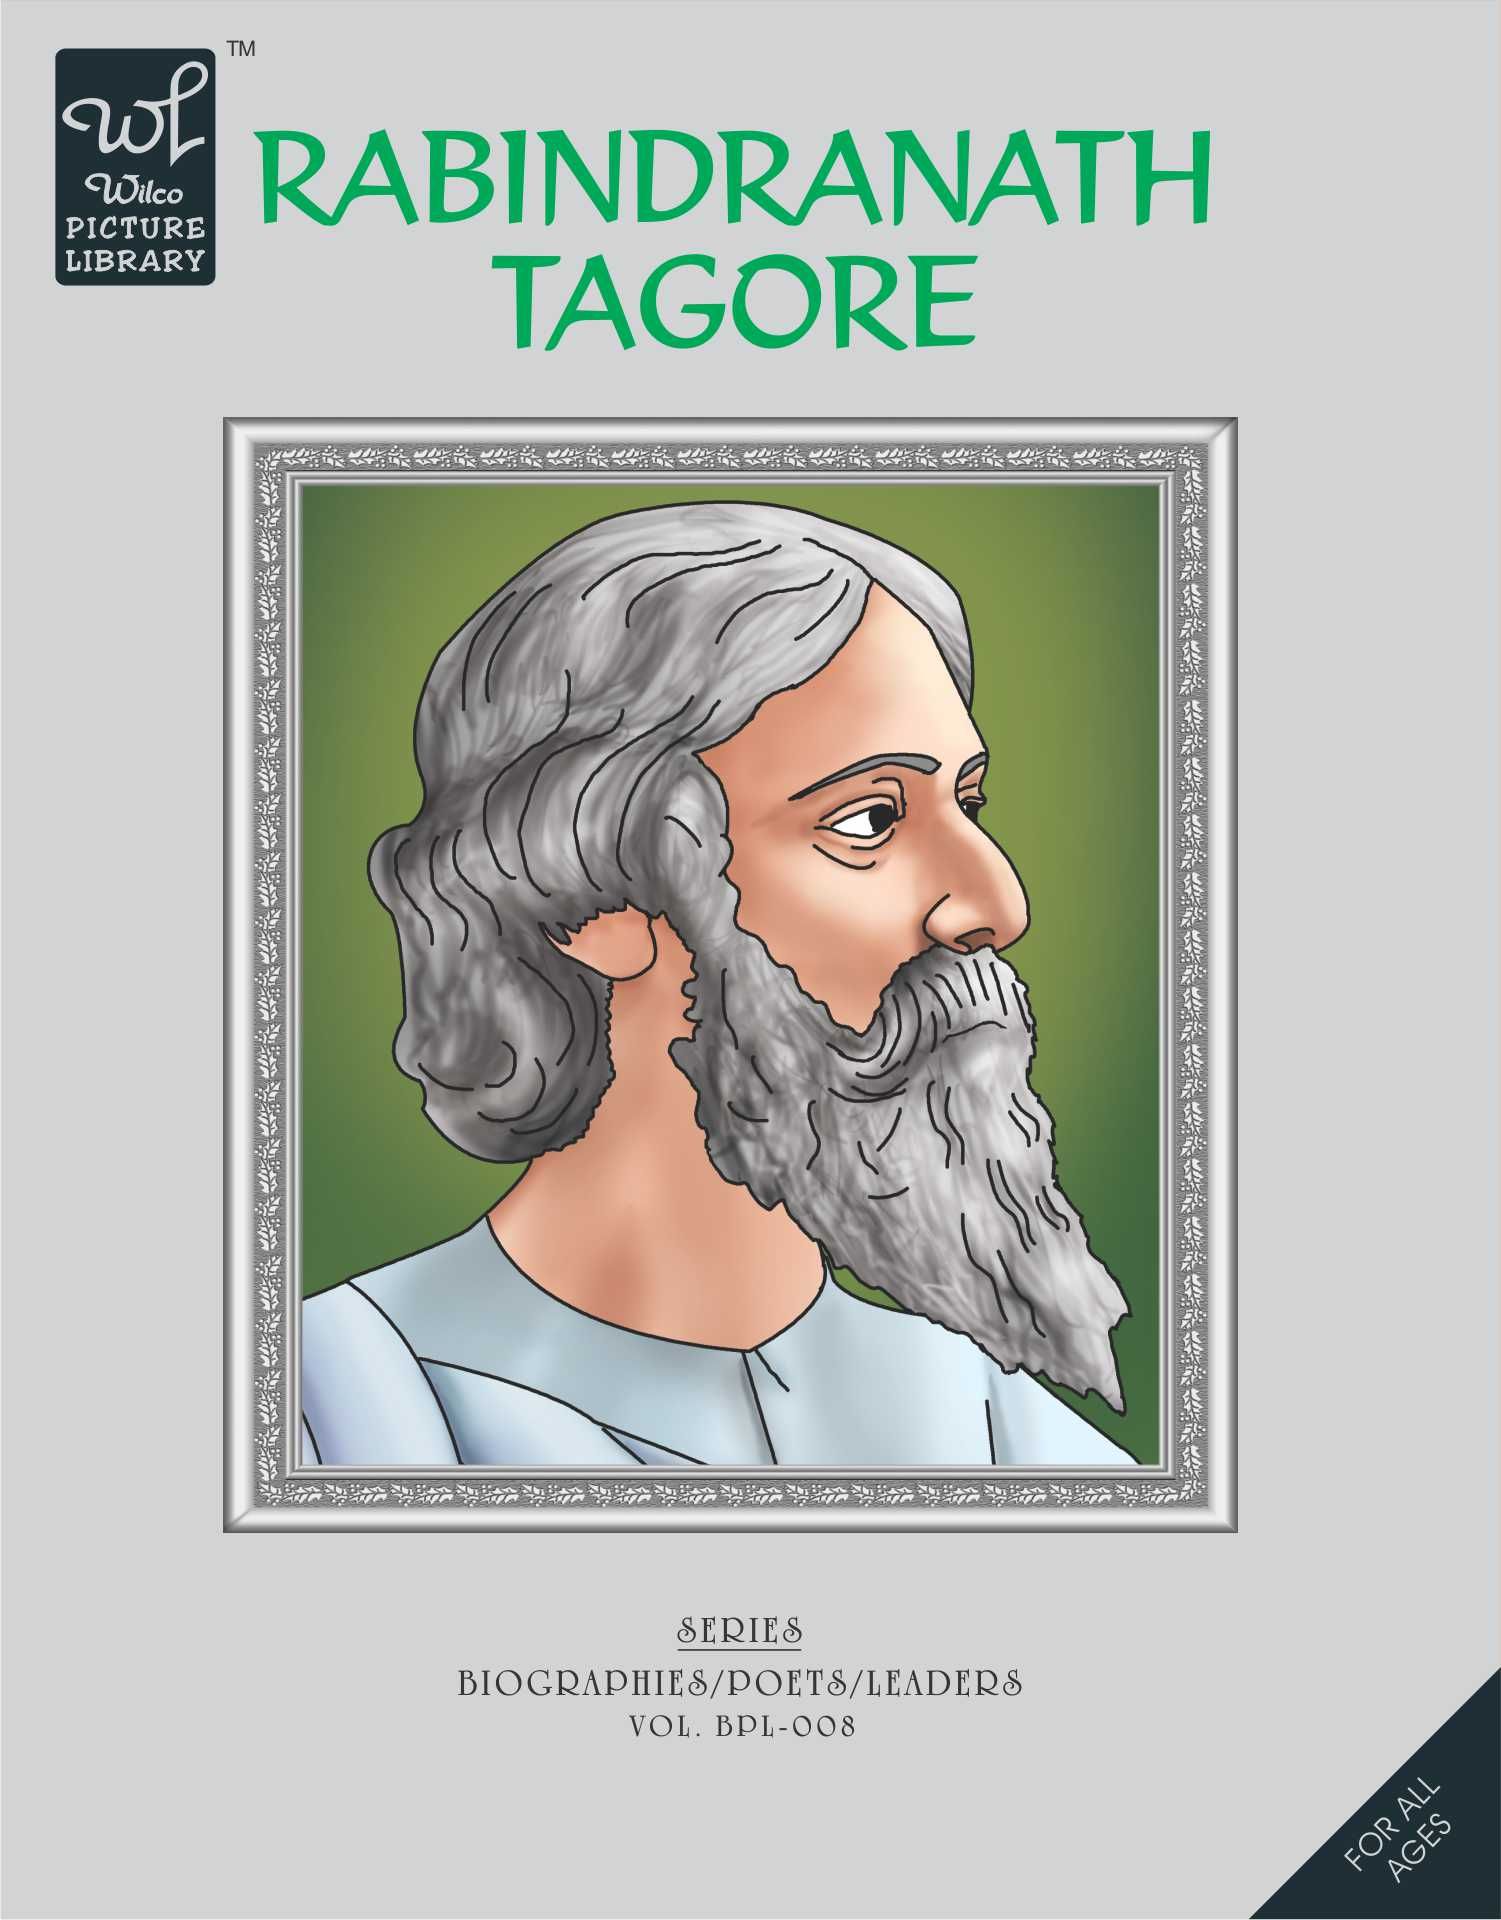 WPL:Rabindranath Tagore